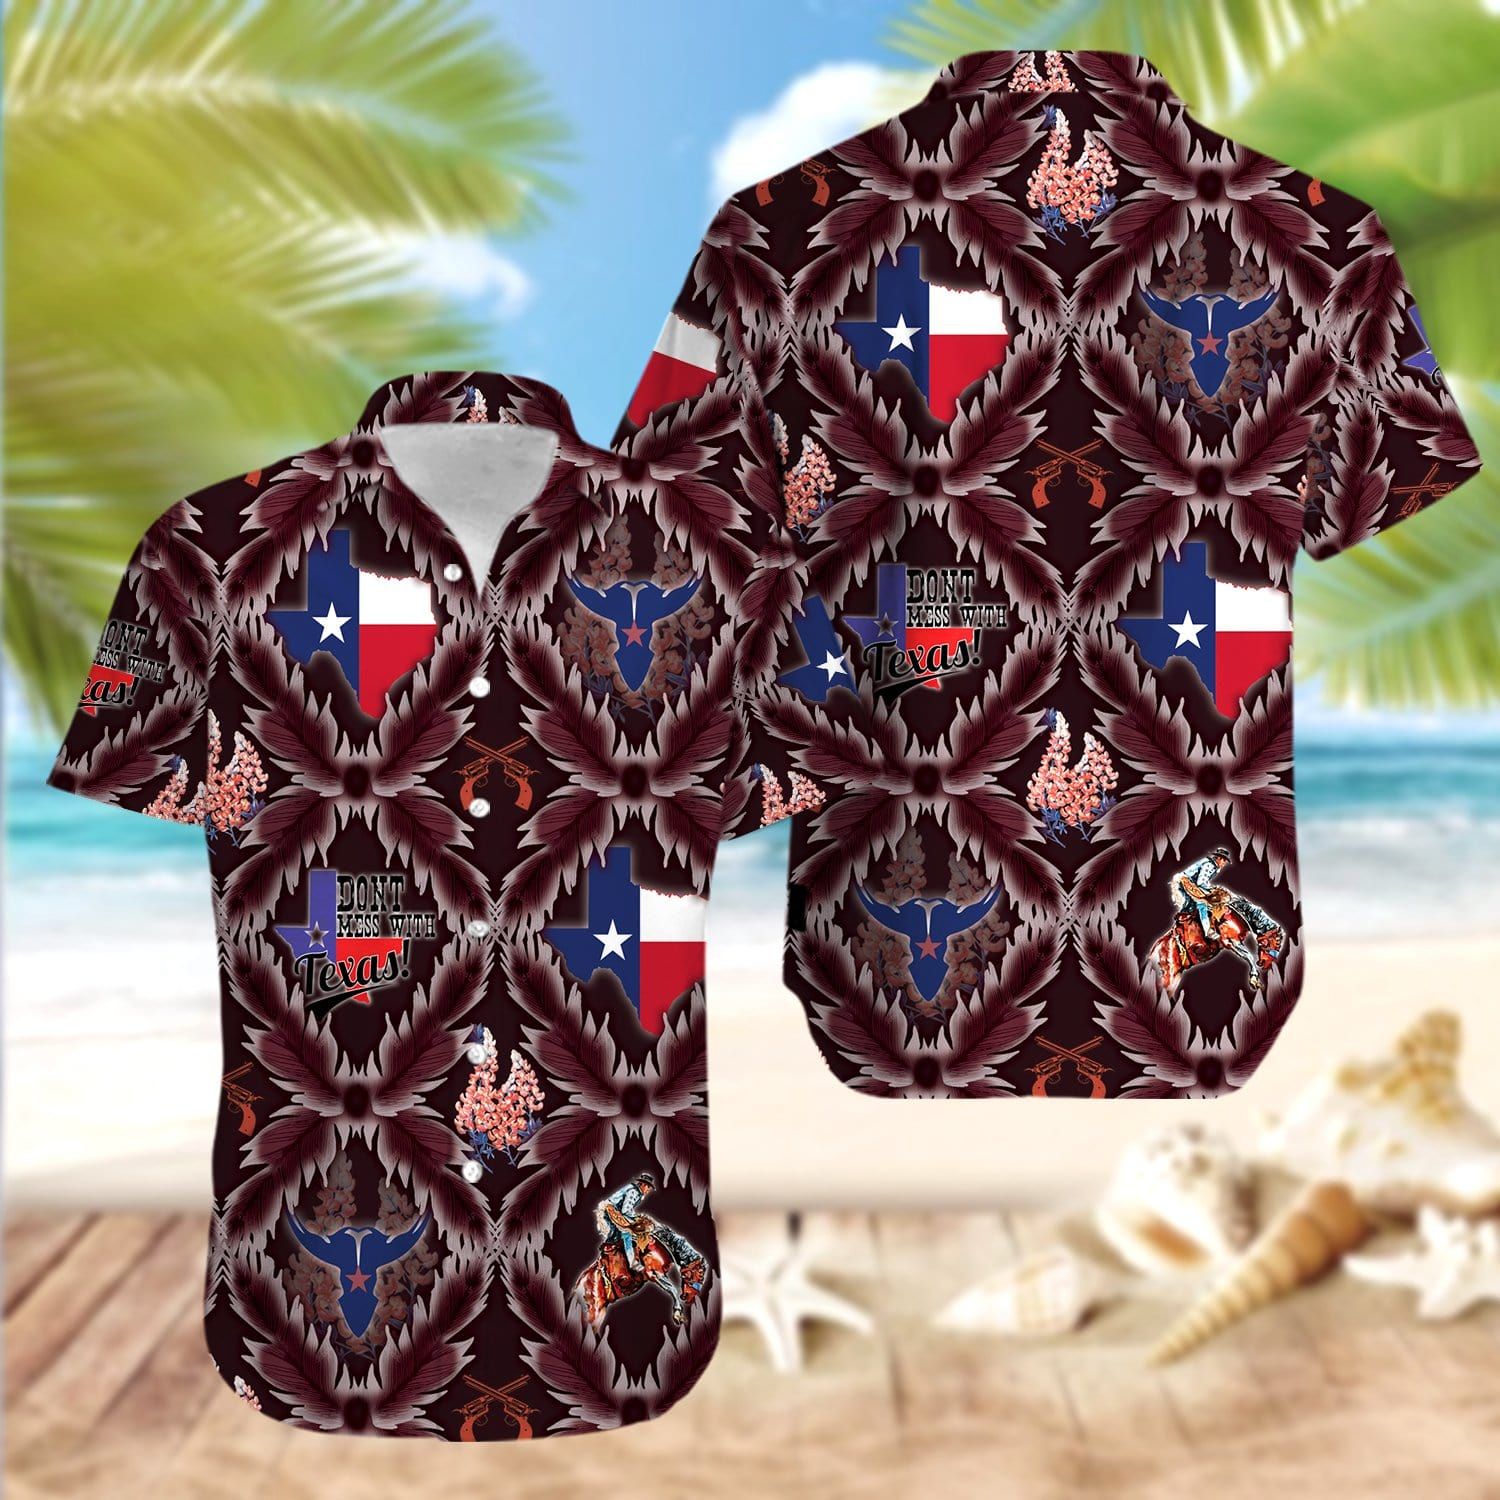 Hawaiian Aloha Shirts All About Texas #1504KV